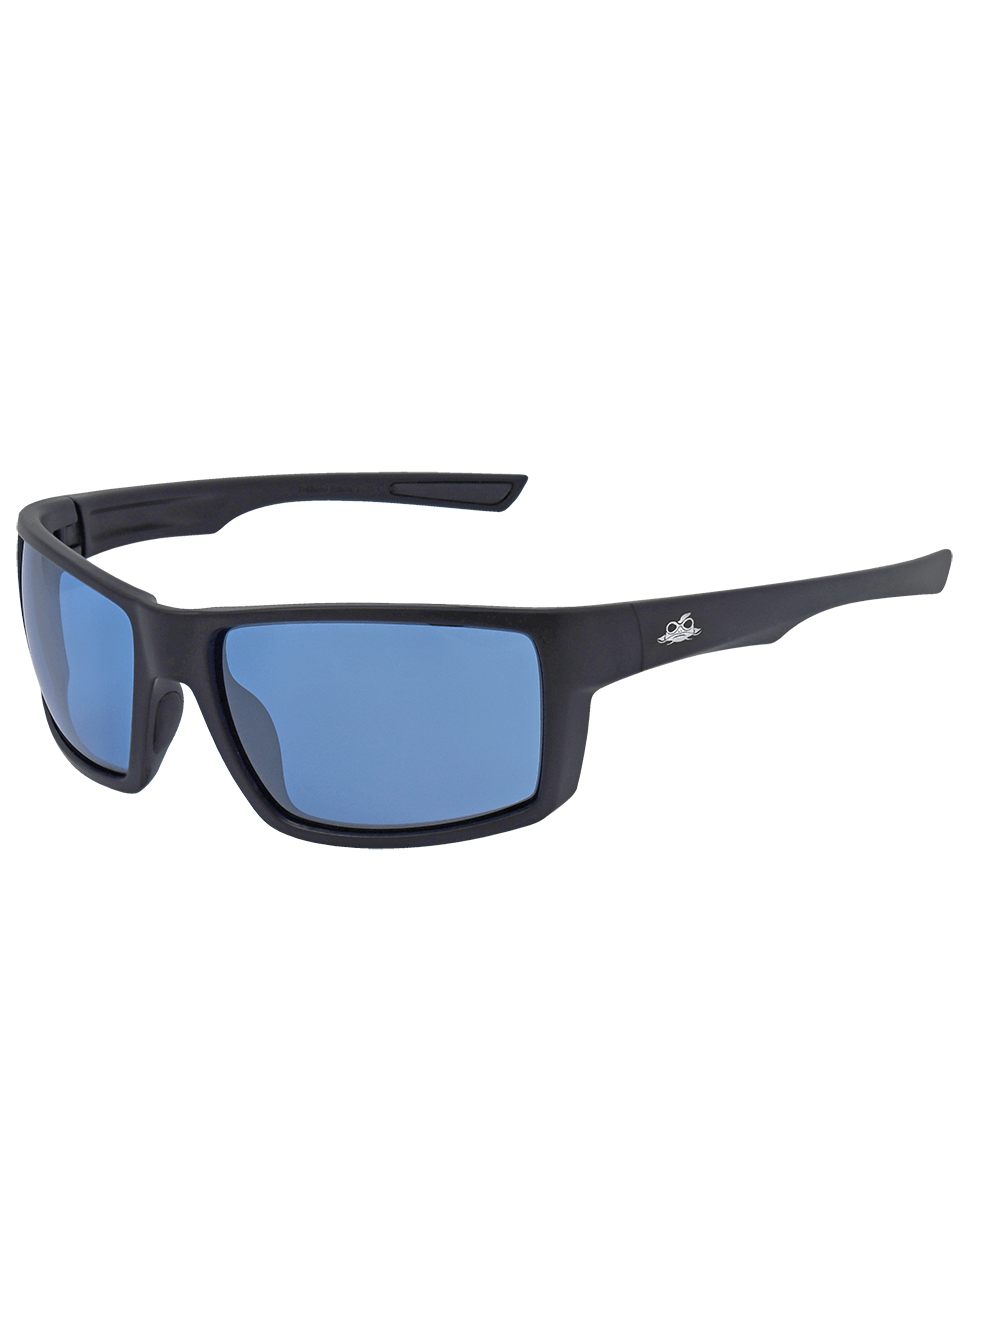 Sawfish™ Blue High-Pressure Sodium (HPS) Blocker Lens, Matte Black Frame Safety Glasses - BH26620